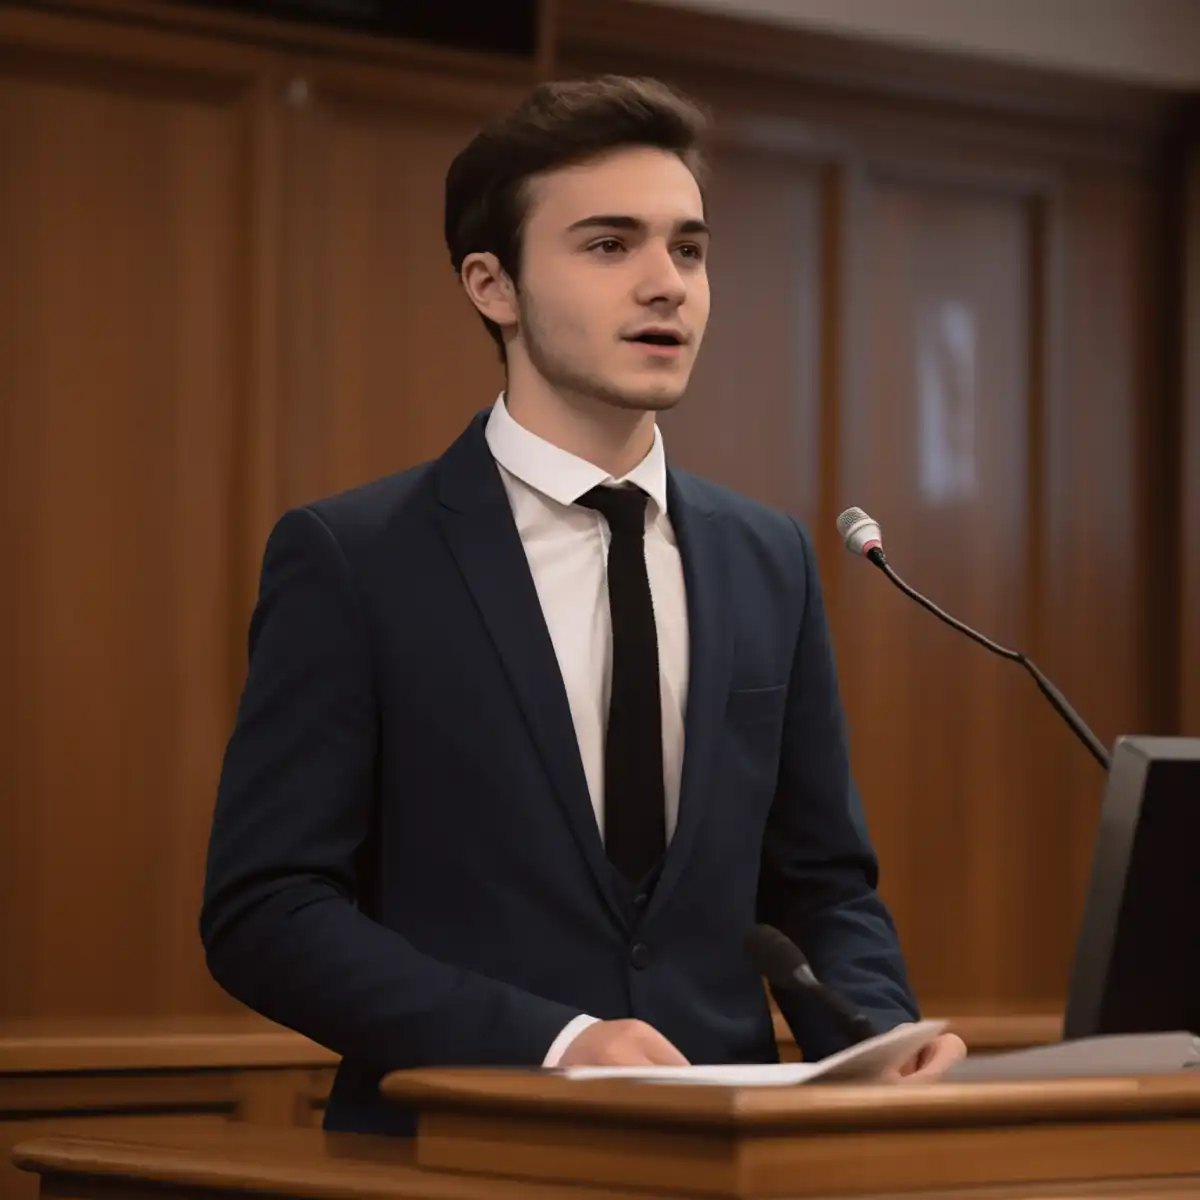 Law student argues his bed bug lawsuit.